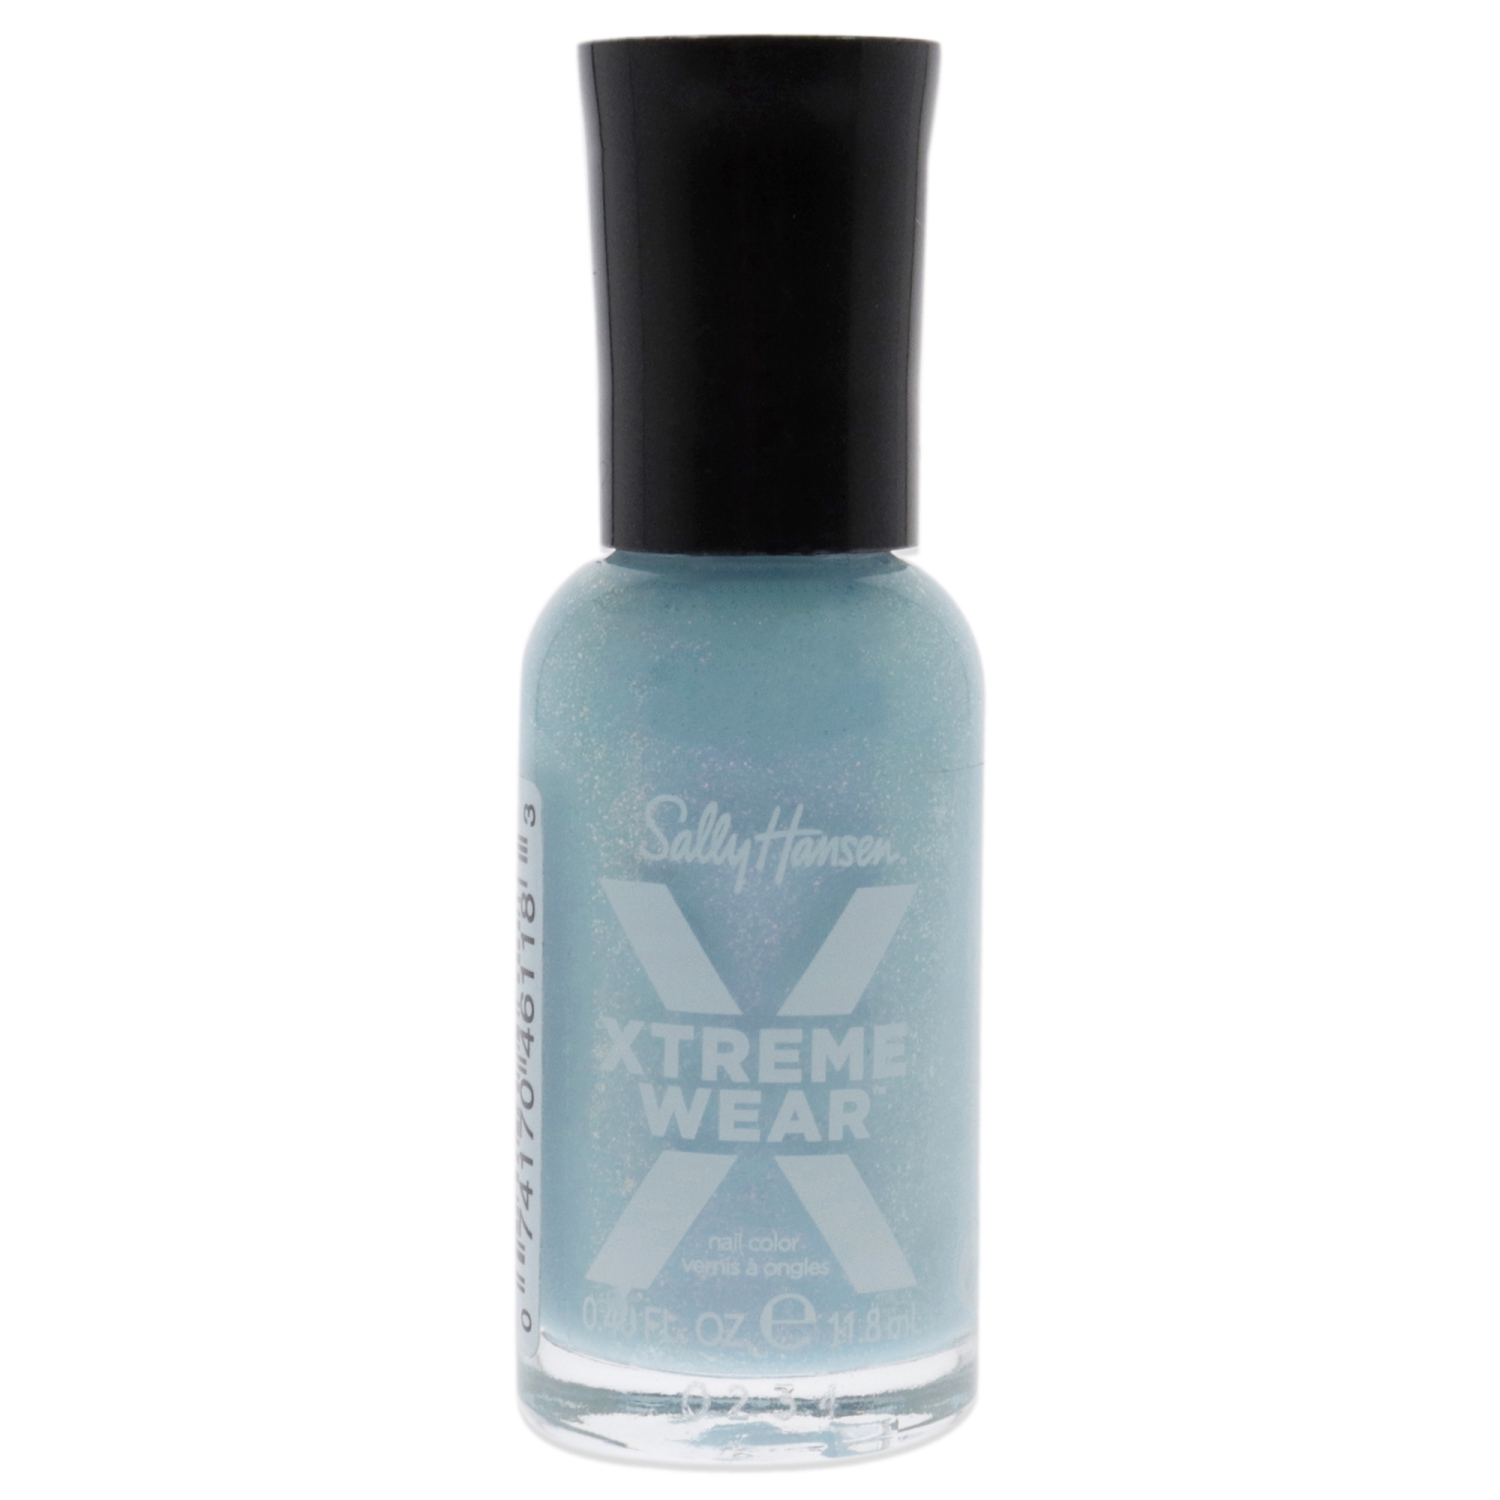 Xtreme Wear Nail Color - 413 Blue Blitz by Sally Hansen for Women - 0.4 oz Nail Polish